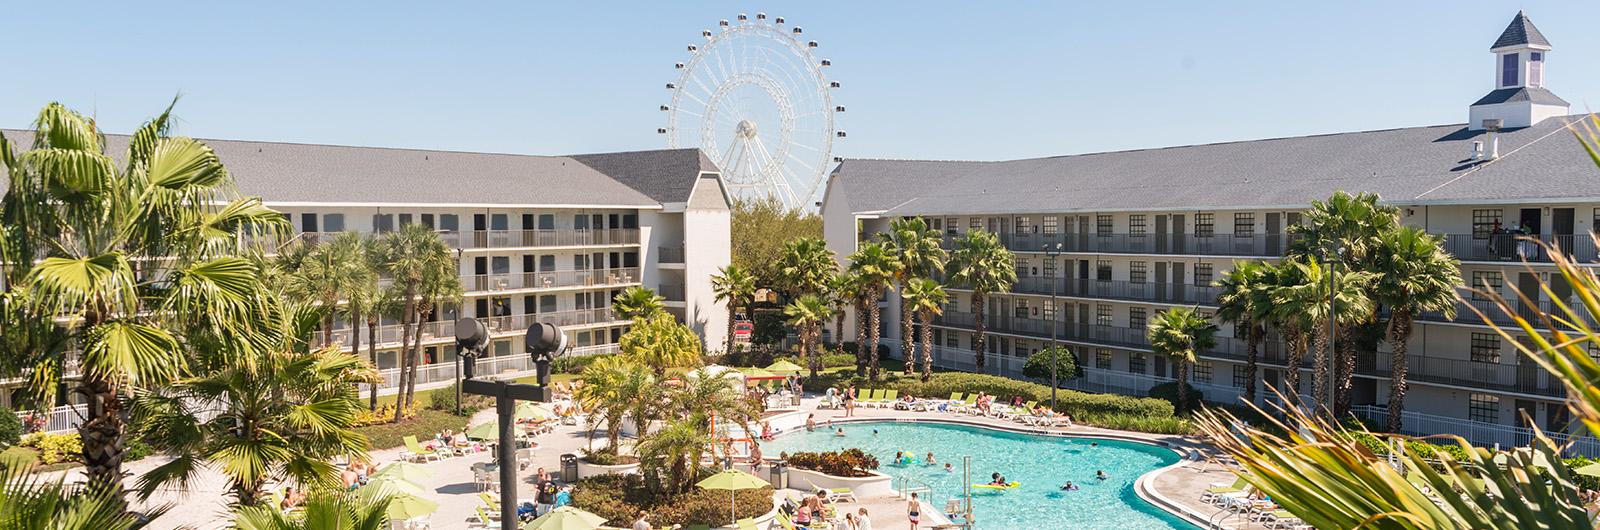 Orlando Hotel Deals Orlando Resort Package At Avanti